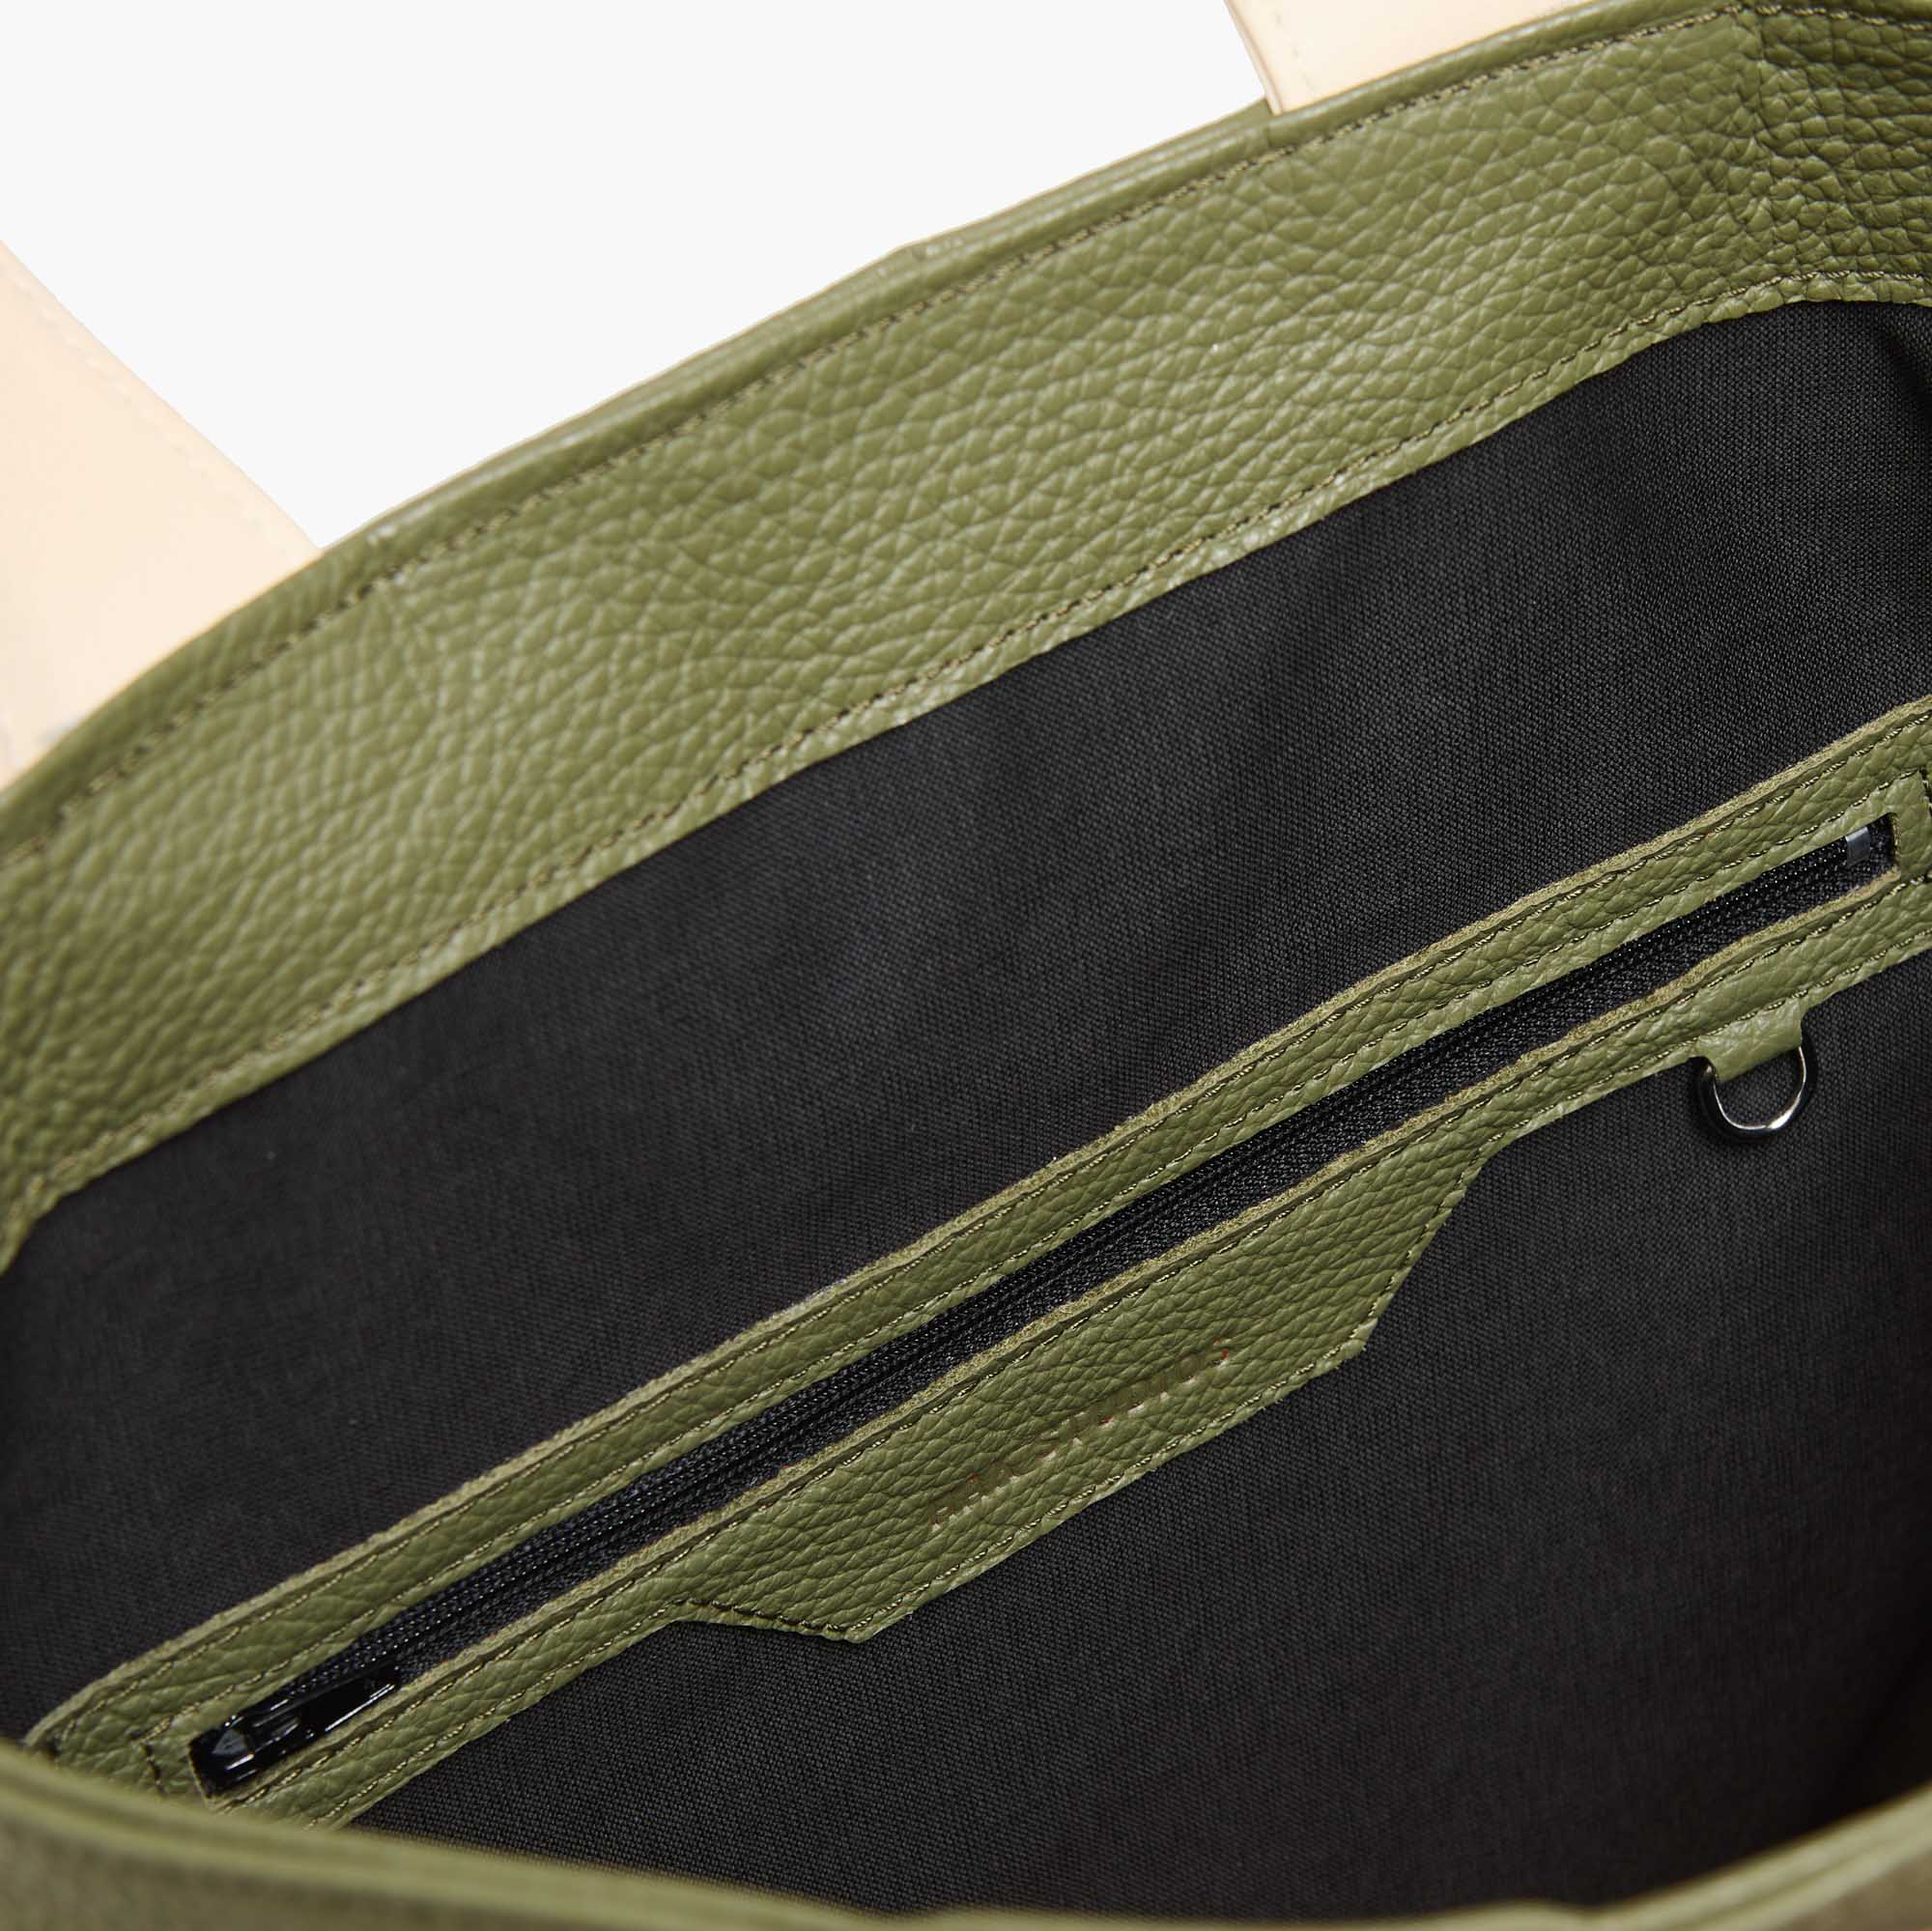 Leather handbag in beige-green color